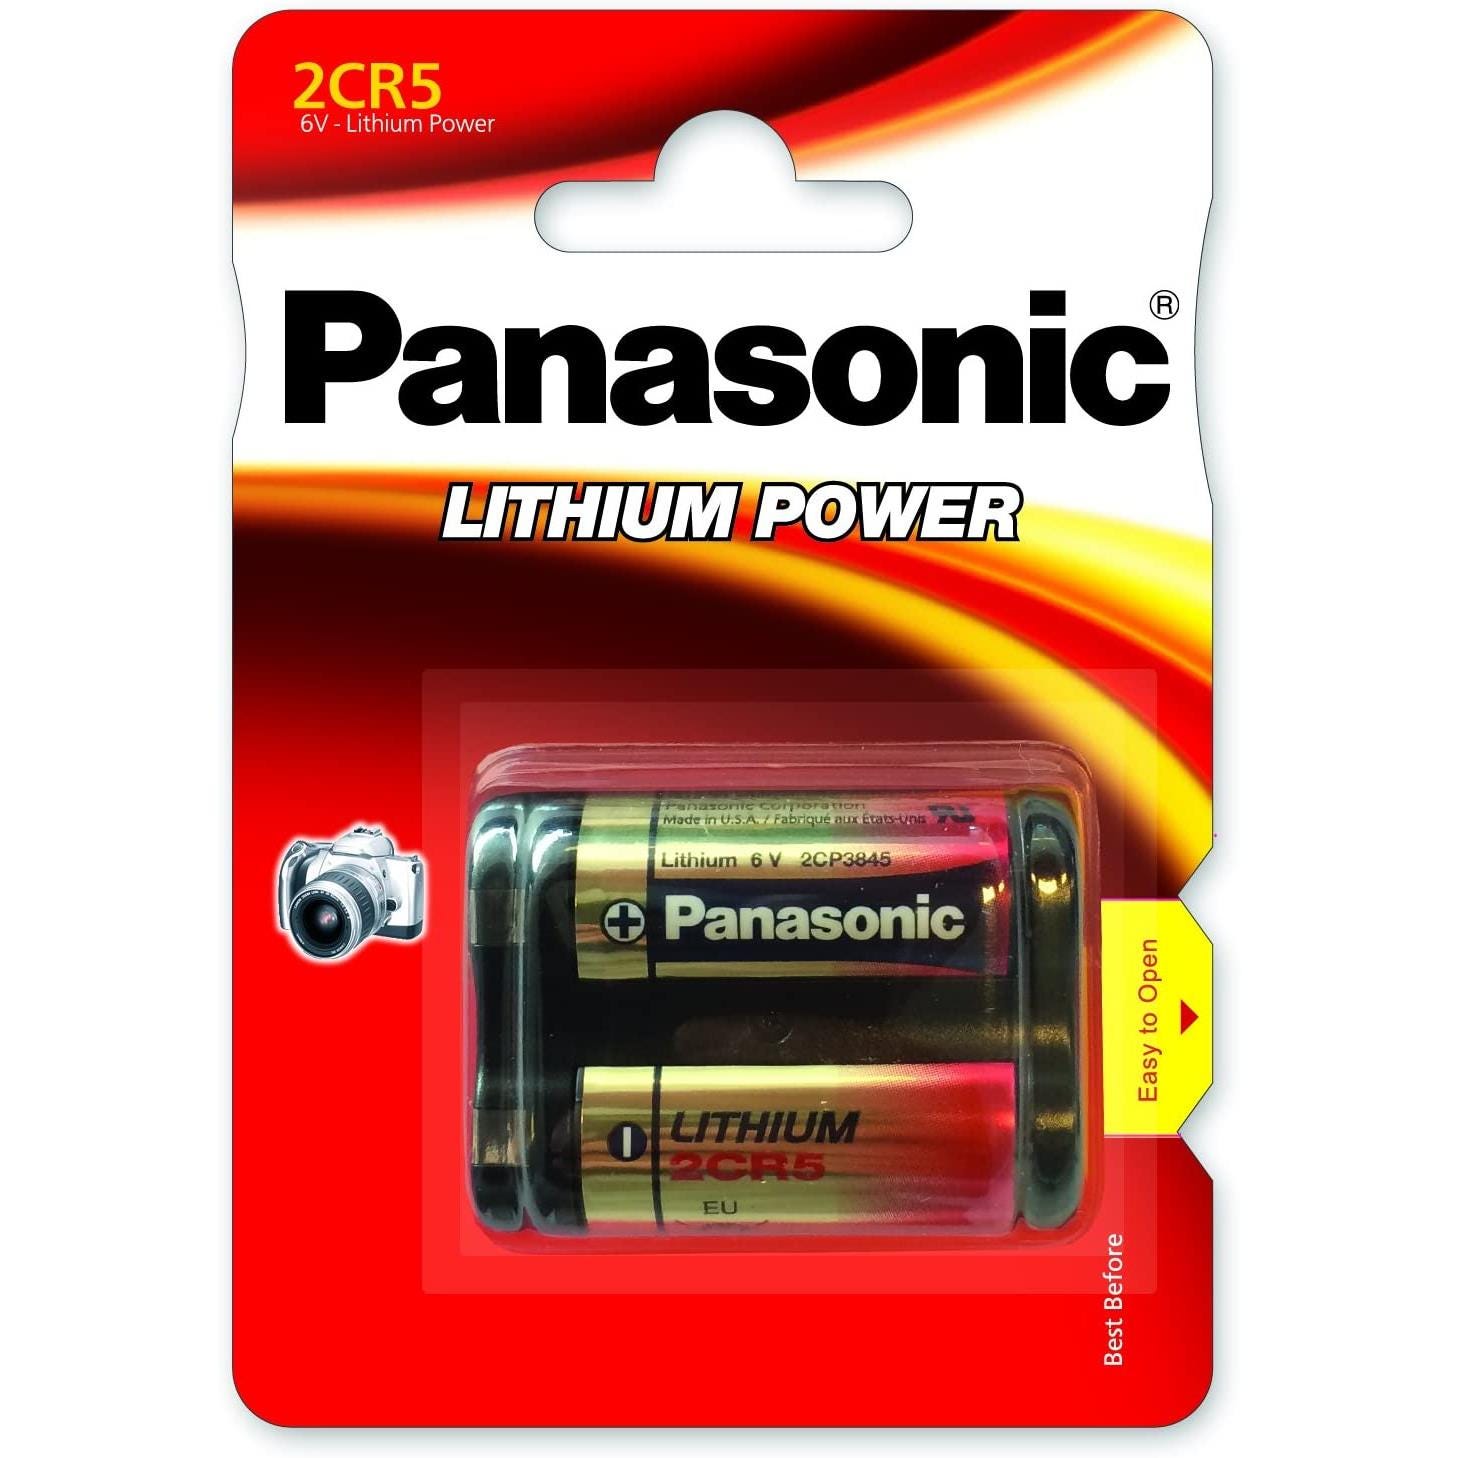 PANASONIC Pile Photo Power 2 CR 5 Lithium battery 6V 2 CR 5 1